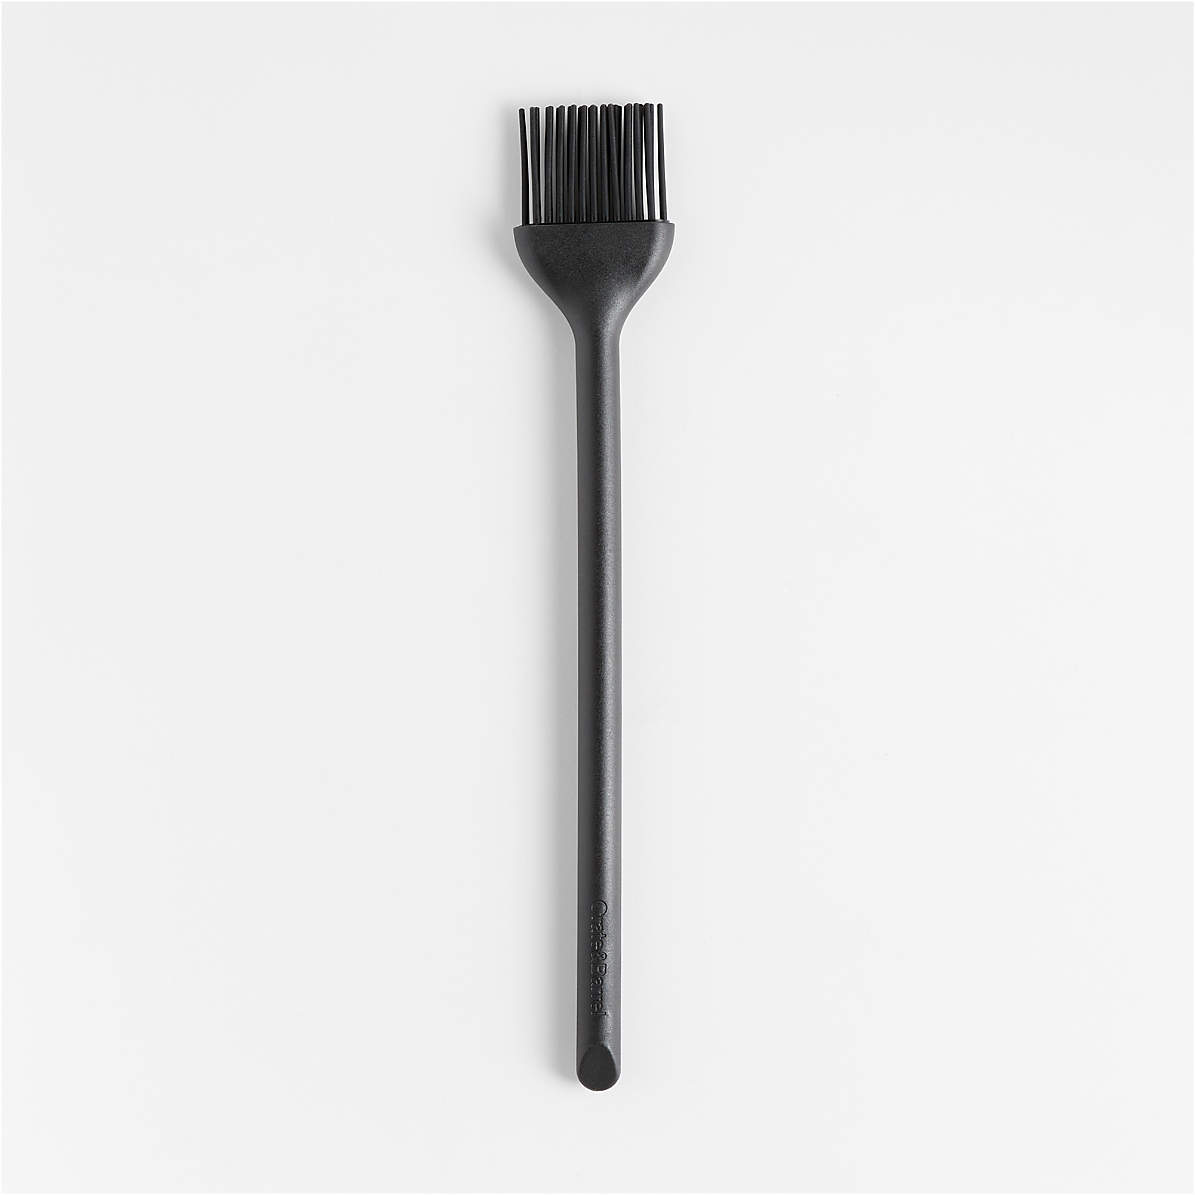 Custom Imprinted Small Silicone Basting Brushes